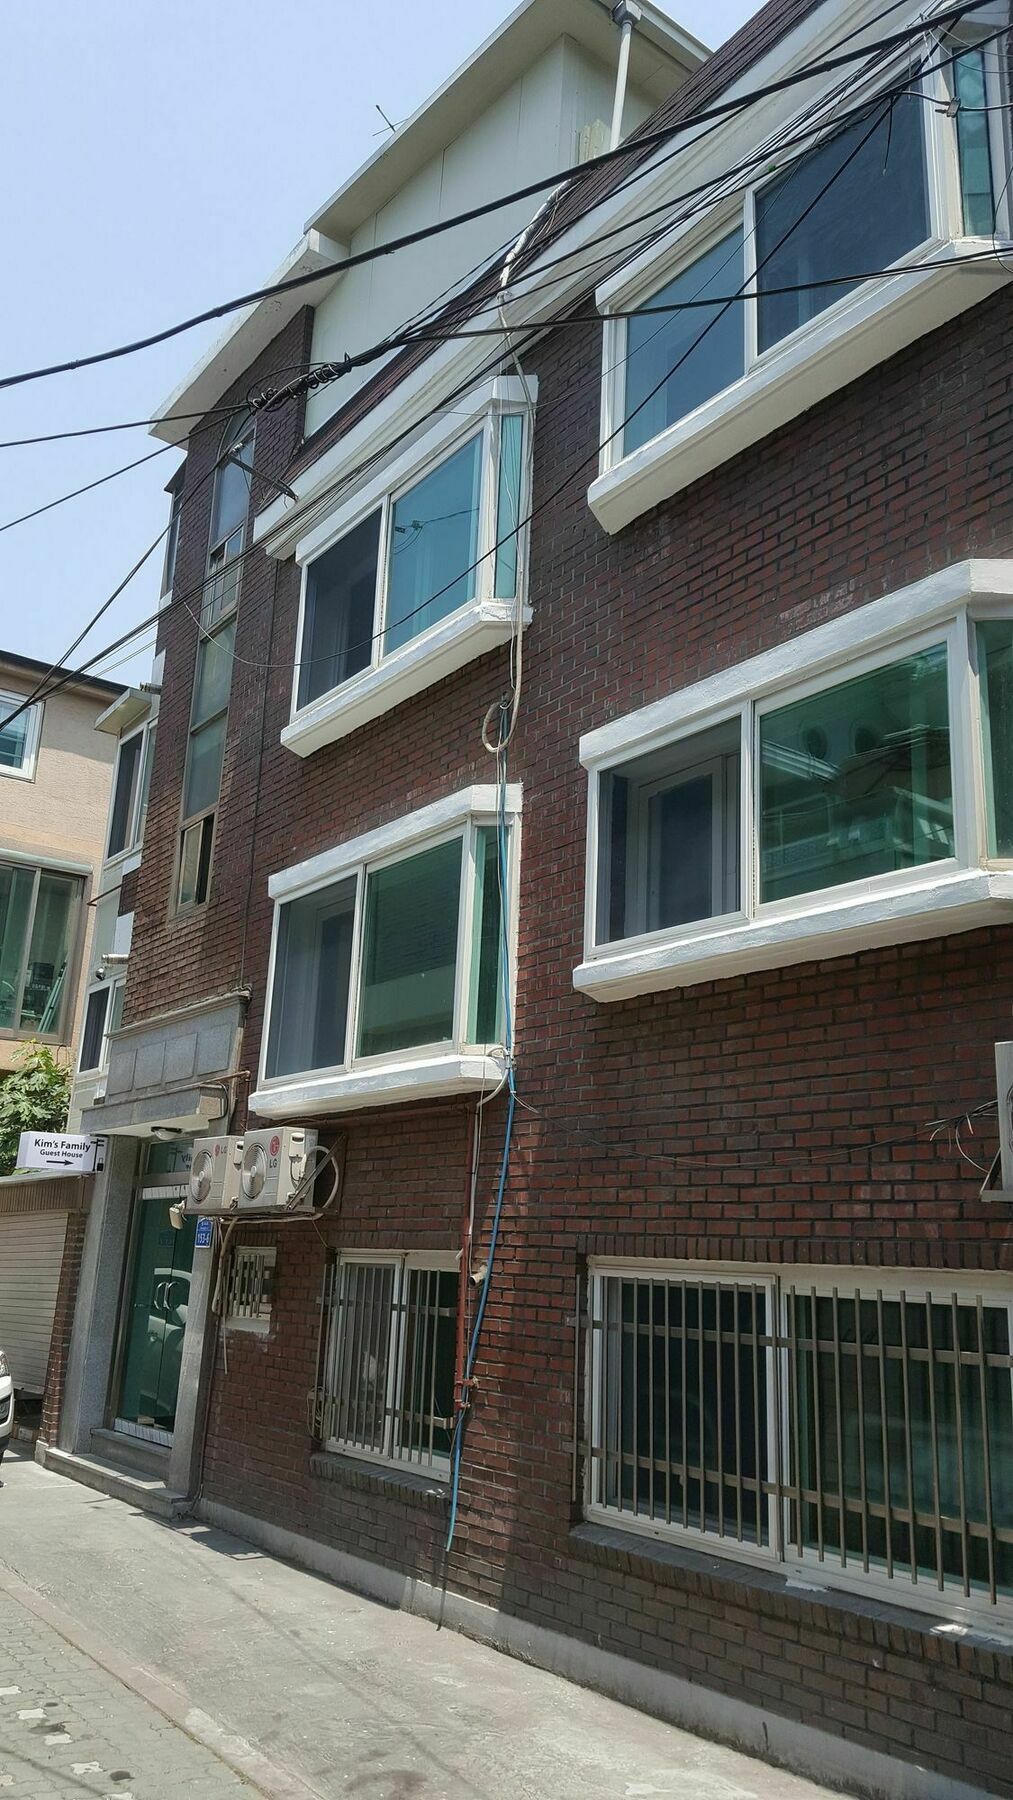 Kim'S Family Guesthouse โซล ภายนอก รูปภาพ